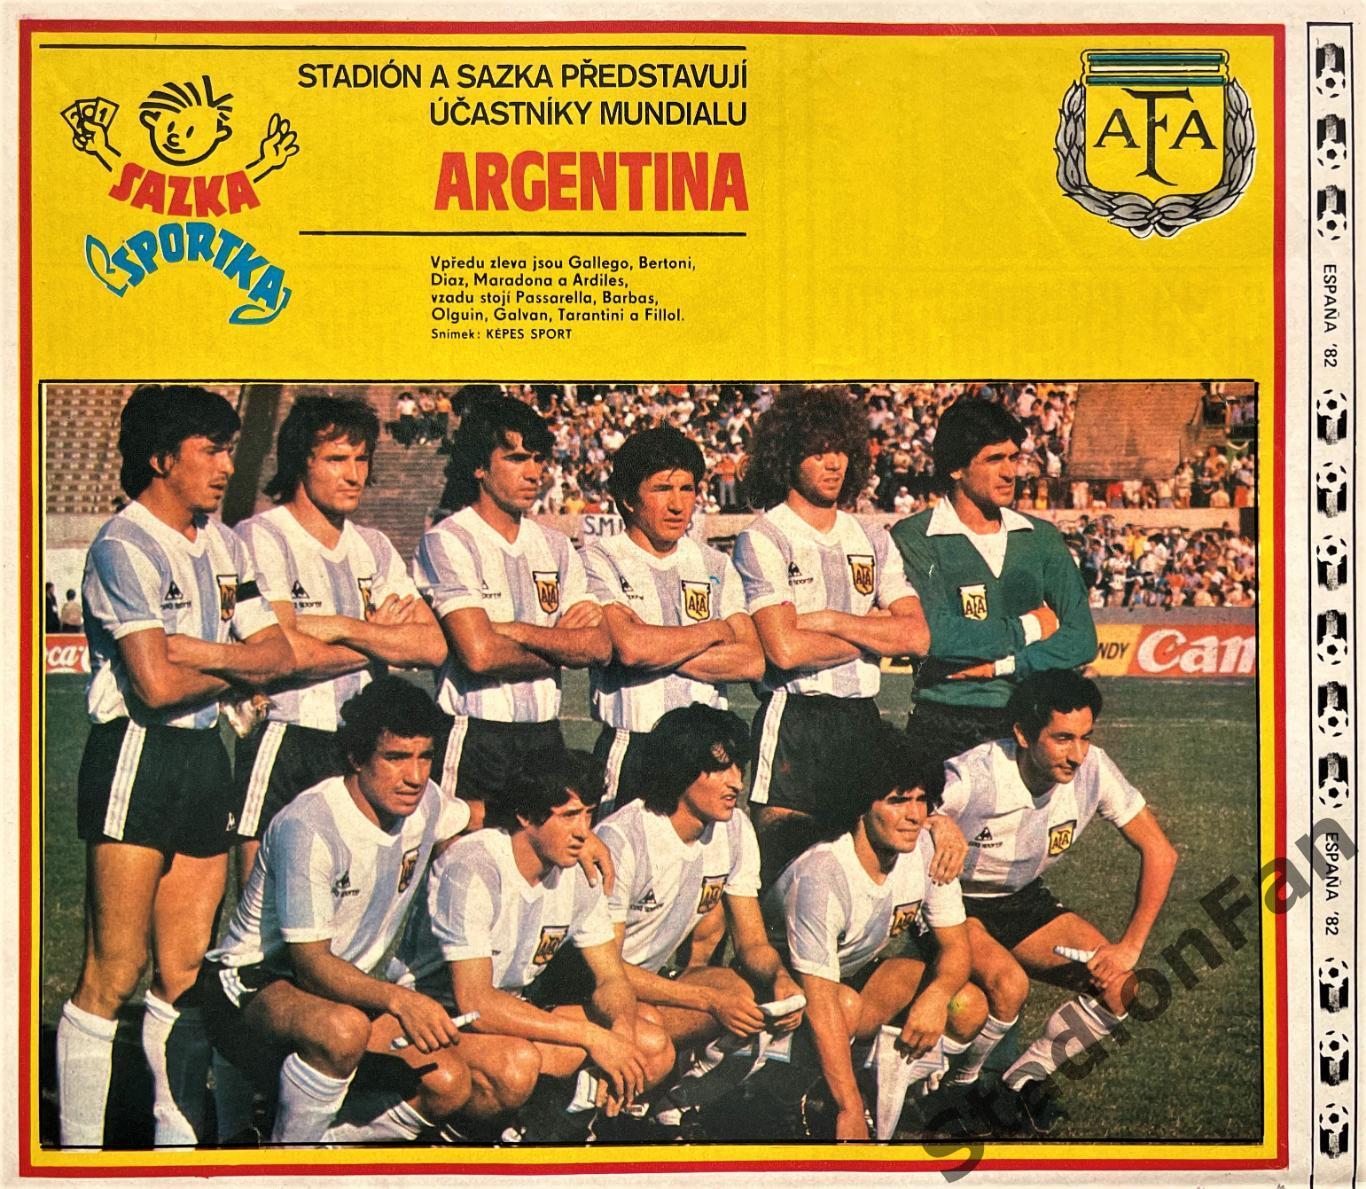 Постер из журнала Стадион (Stadion) - Argentina, 1982